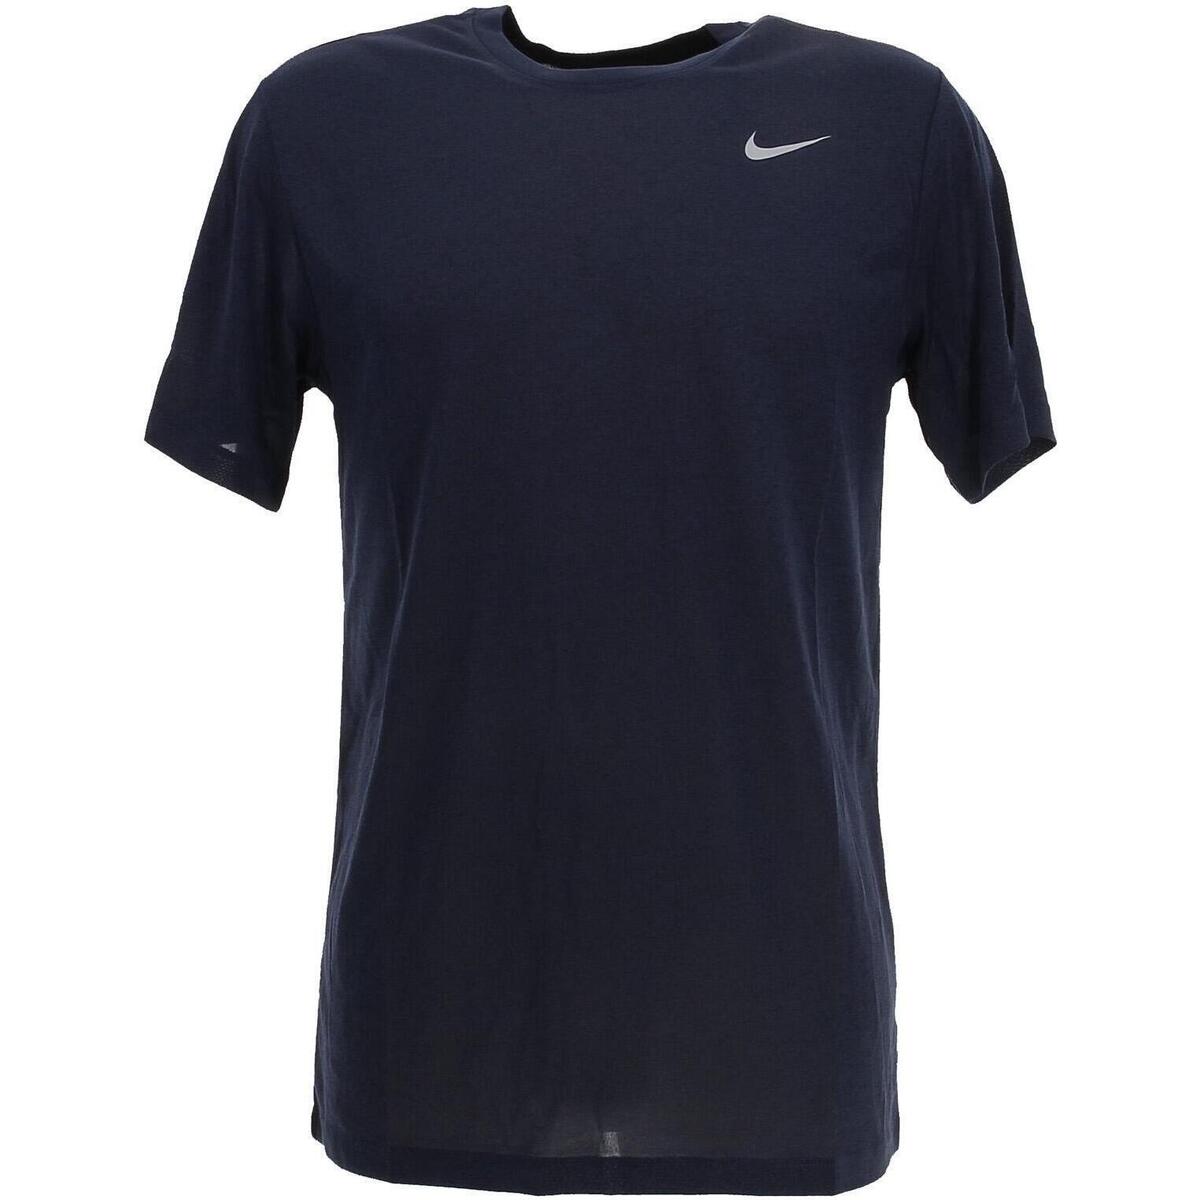 Vêtements Homme diffused Nike Shox Nova TL Grey Red M nk df tee rlgd reset Bleu